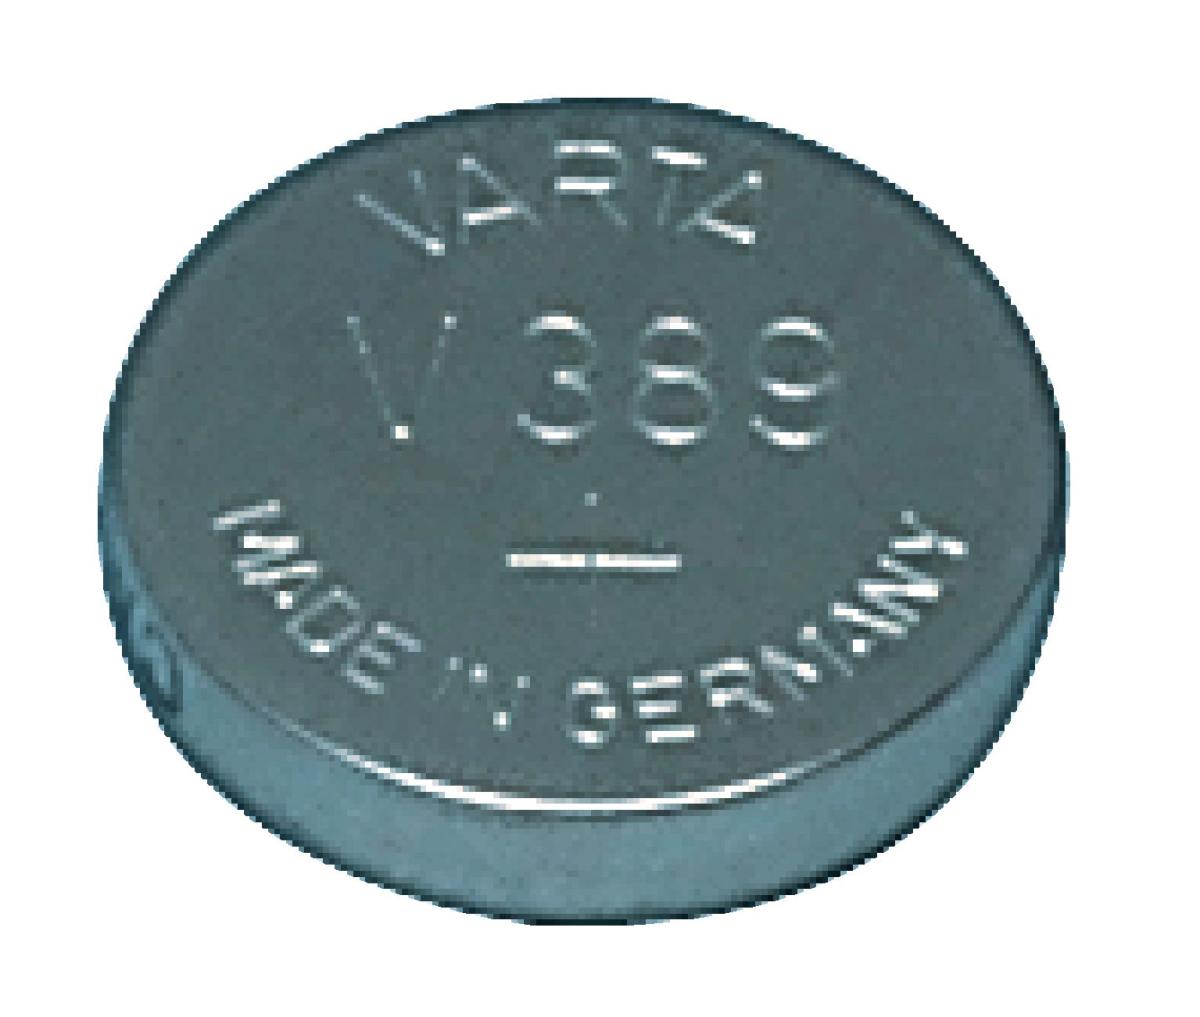 E44-Pile bouton oxyde d'argent 1.55v 85ma (11.6 x 3.05mm)  sr1130w/v10gs/varta 389.101.111 à 1,90 €